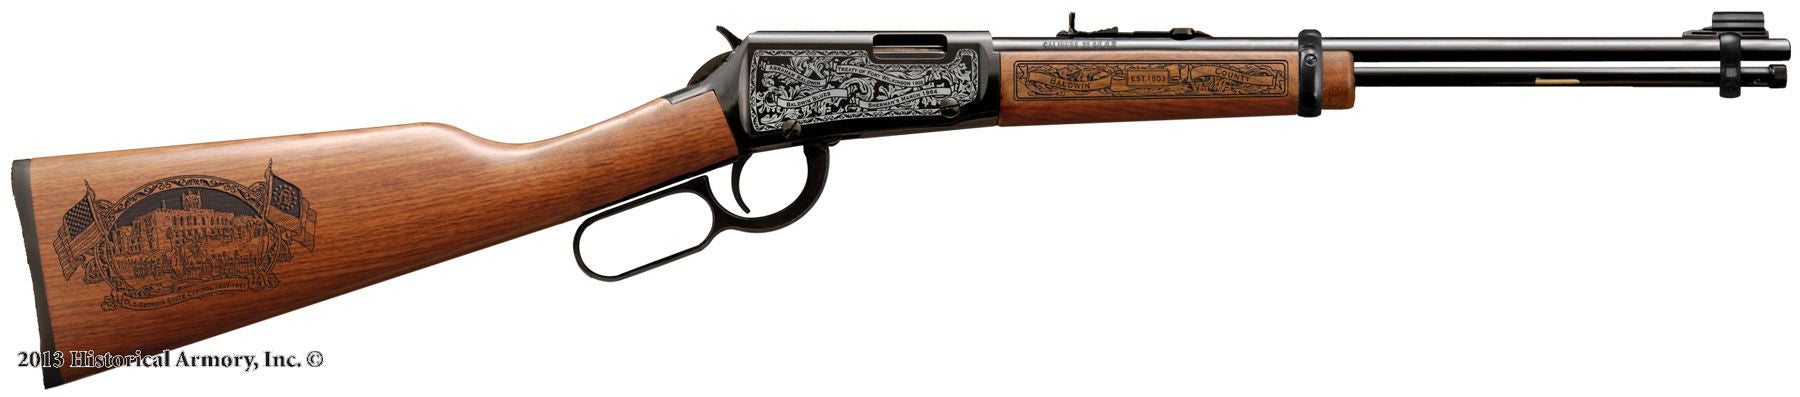 Baldwin county georgia engraved rifle H001